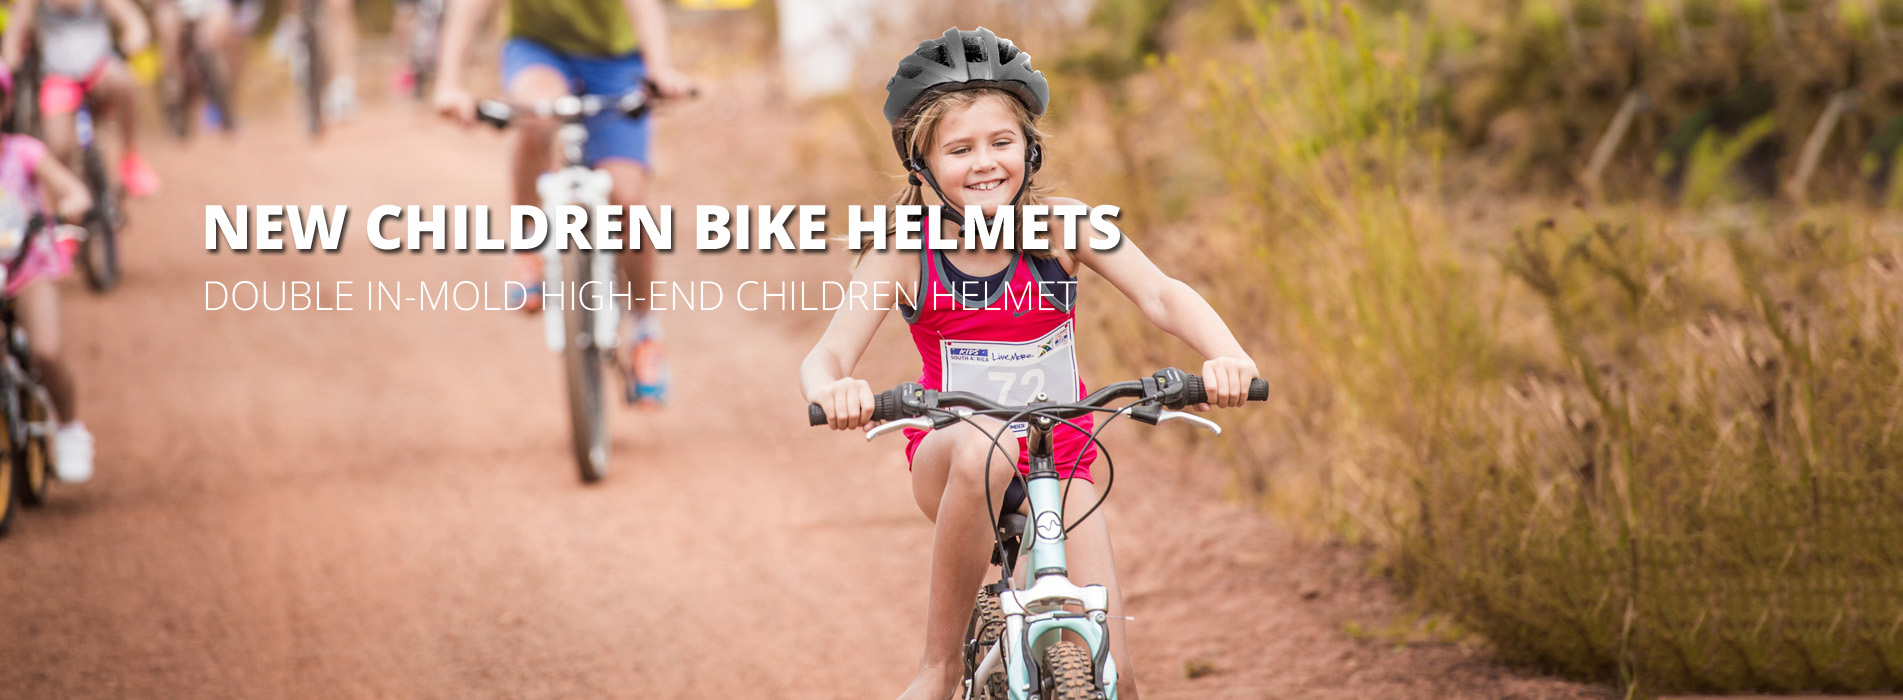 Children's bike helmet c08 banner